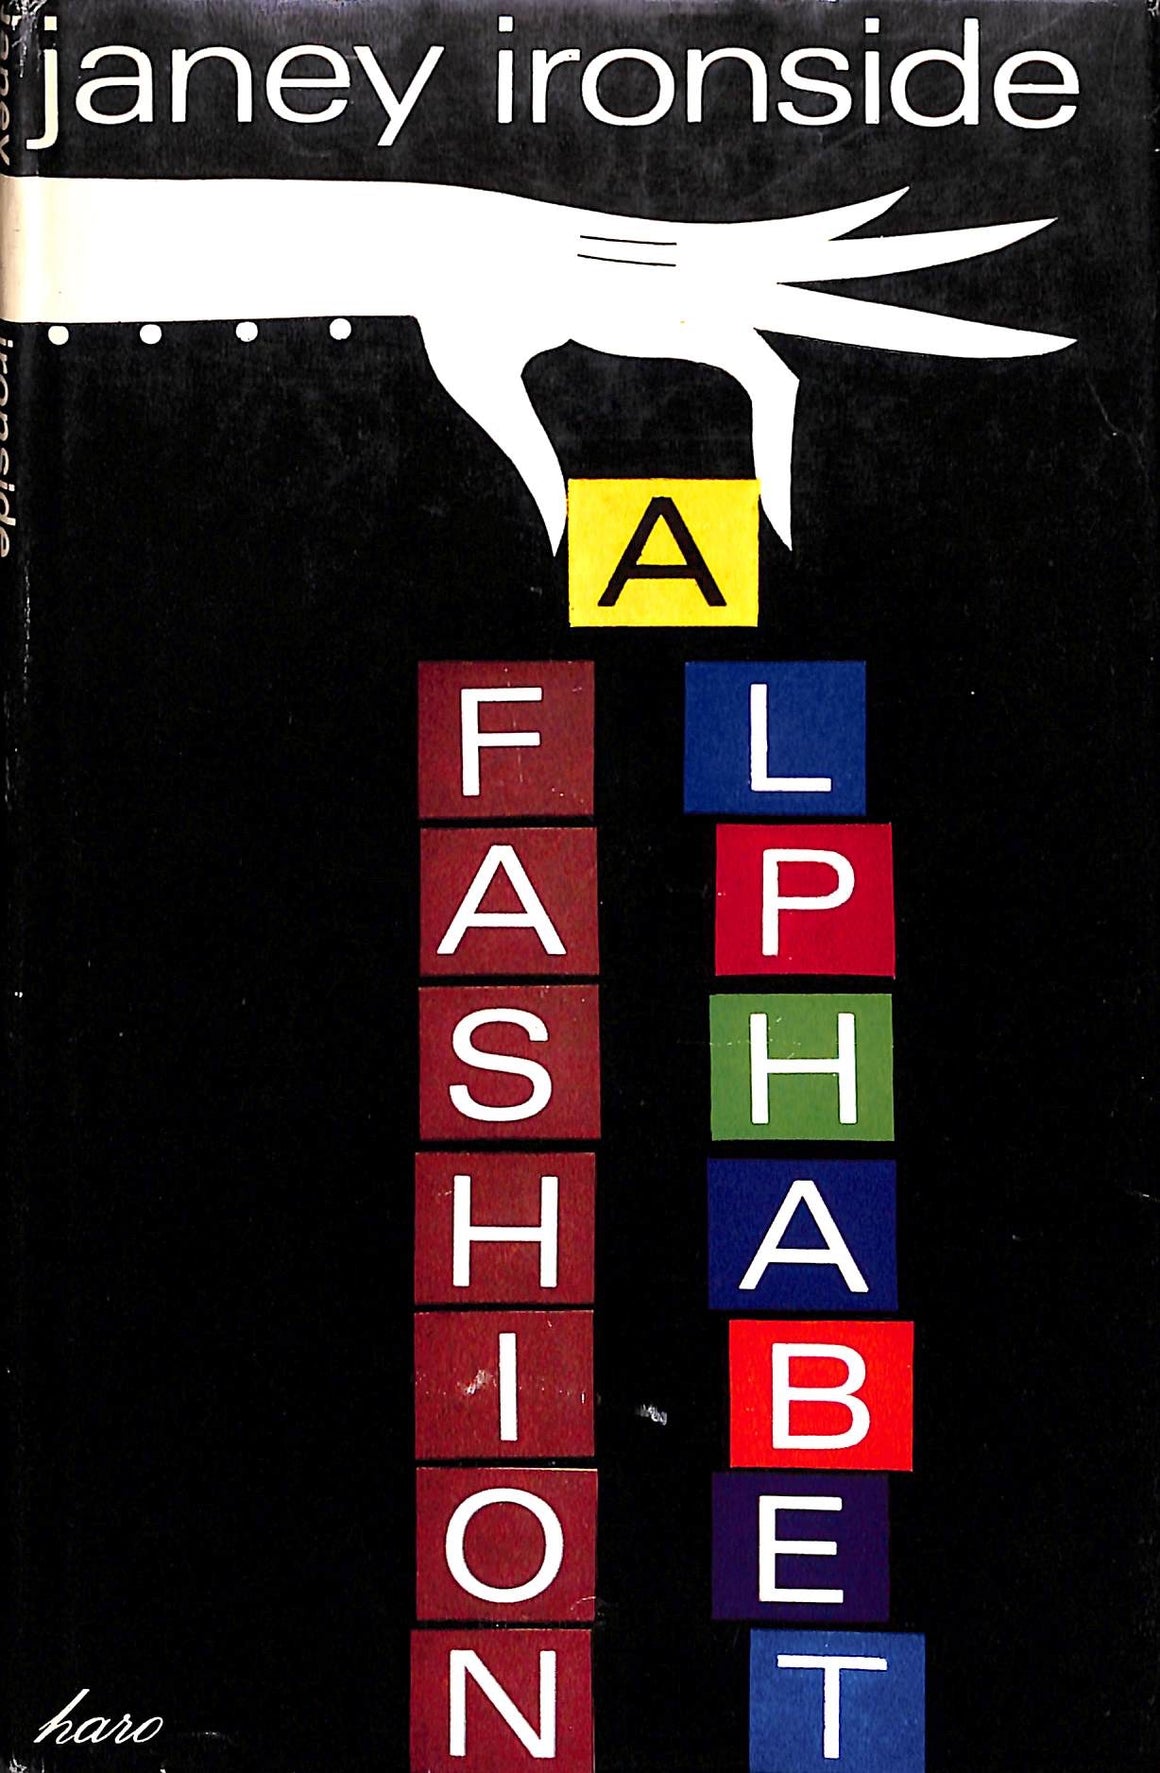 "A Fashion Alphabet" Ironside, Janey